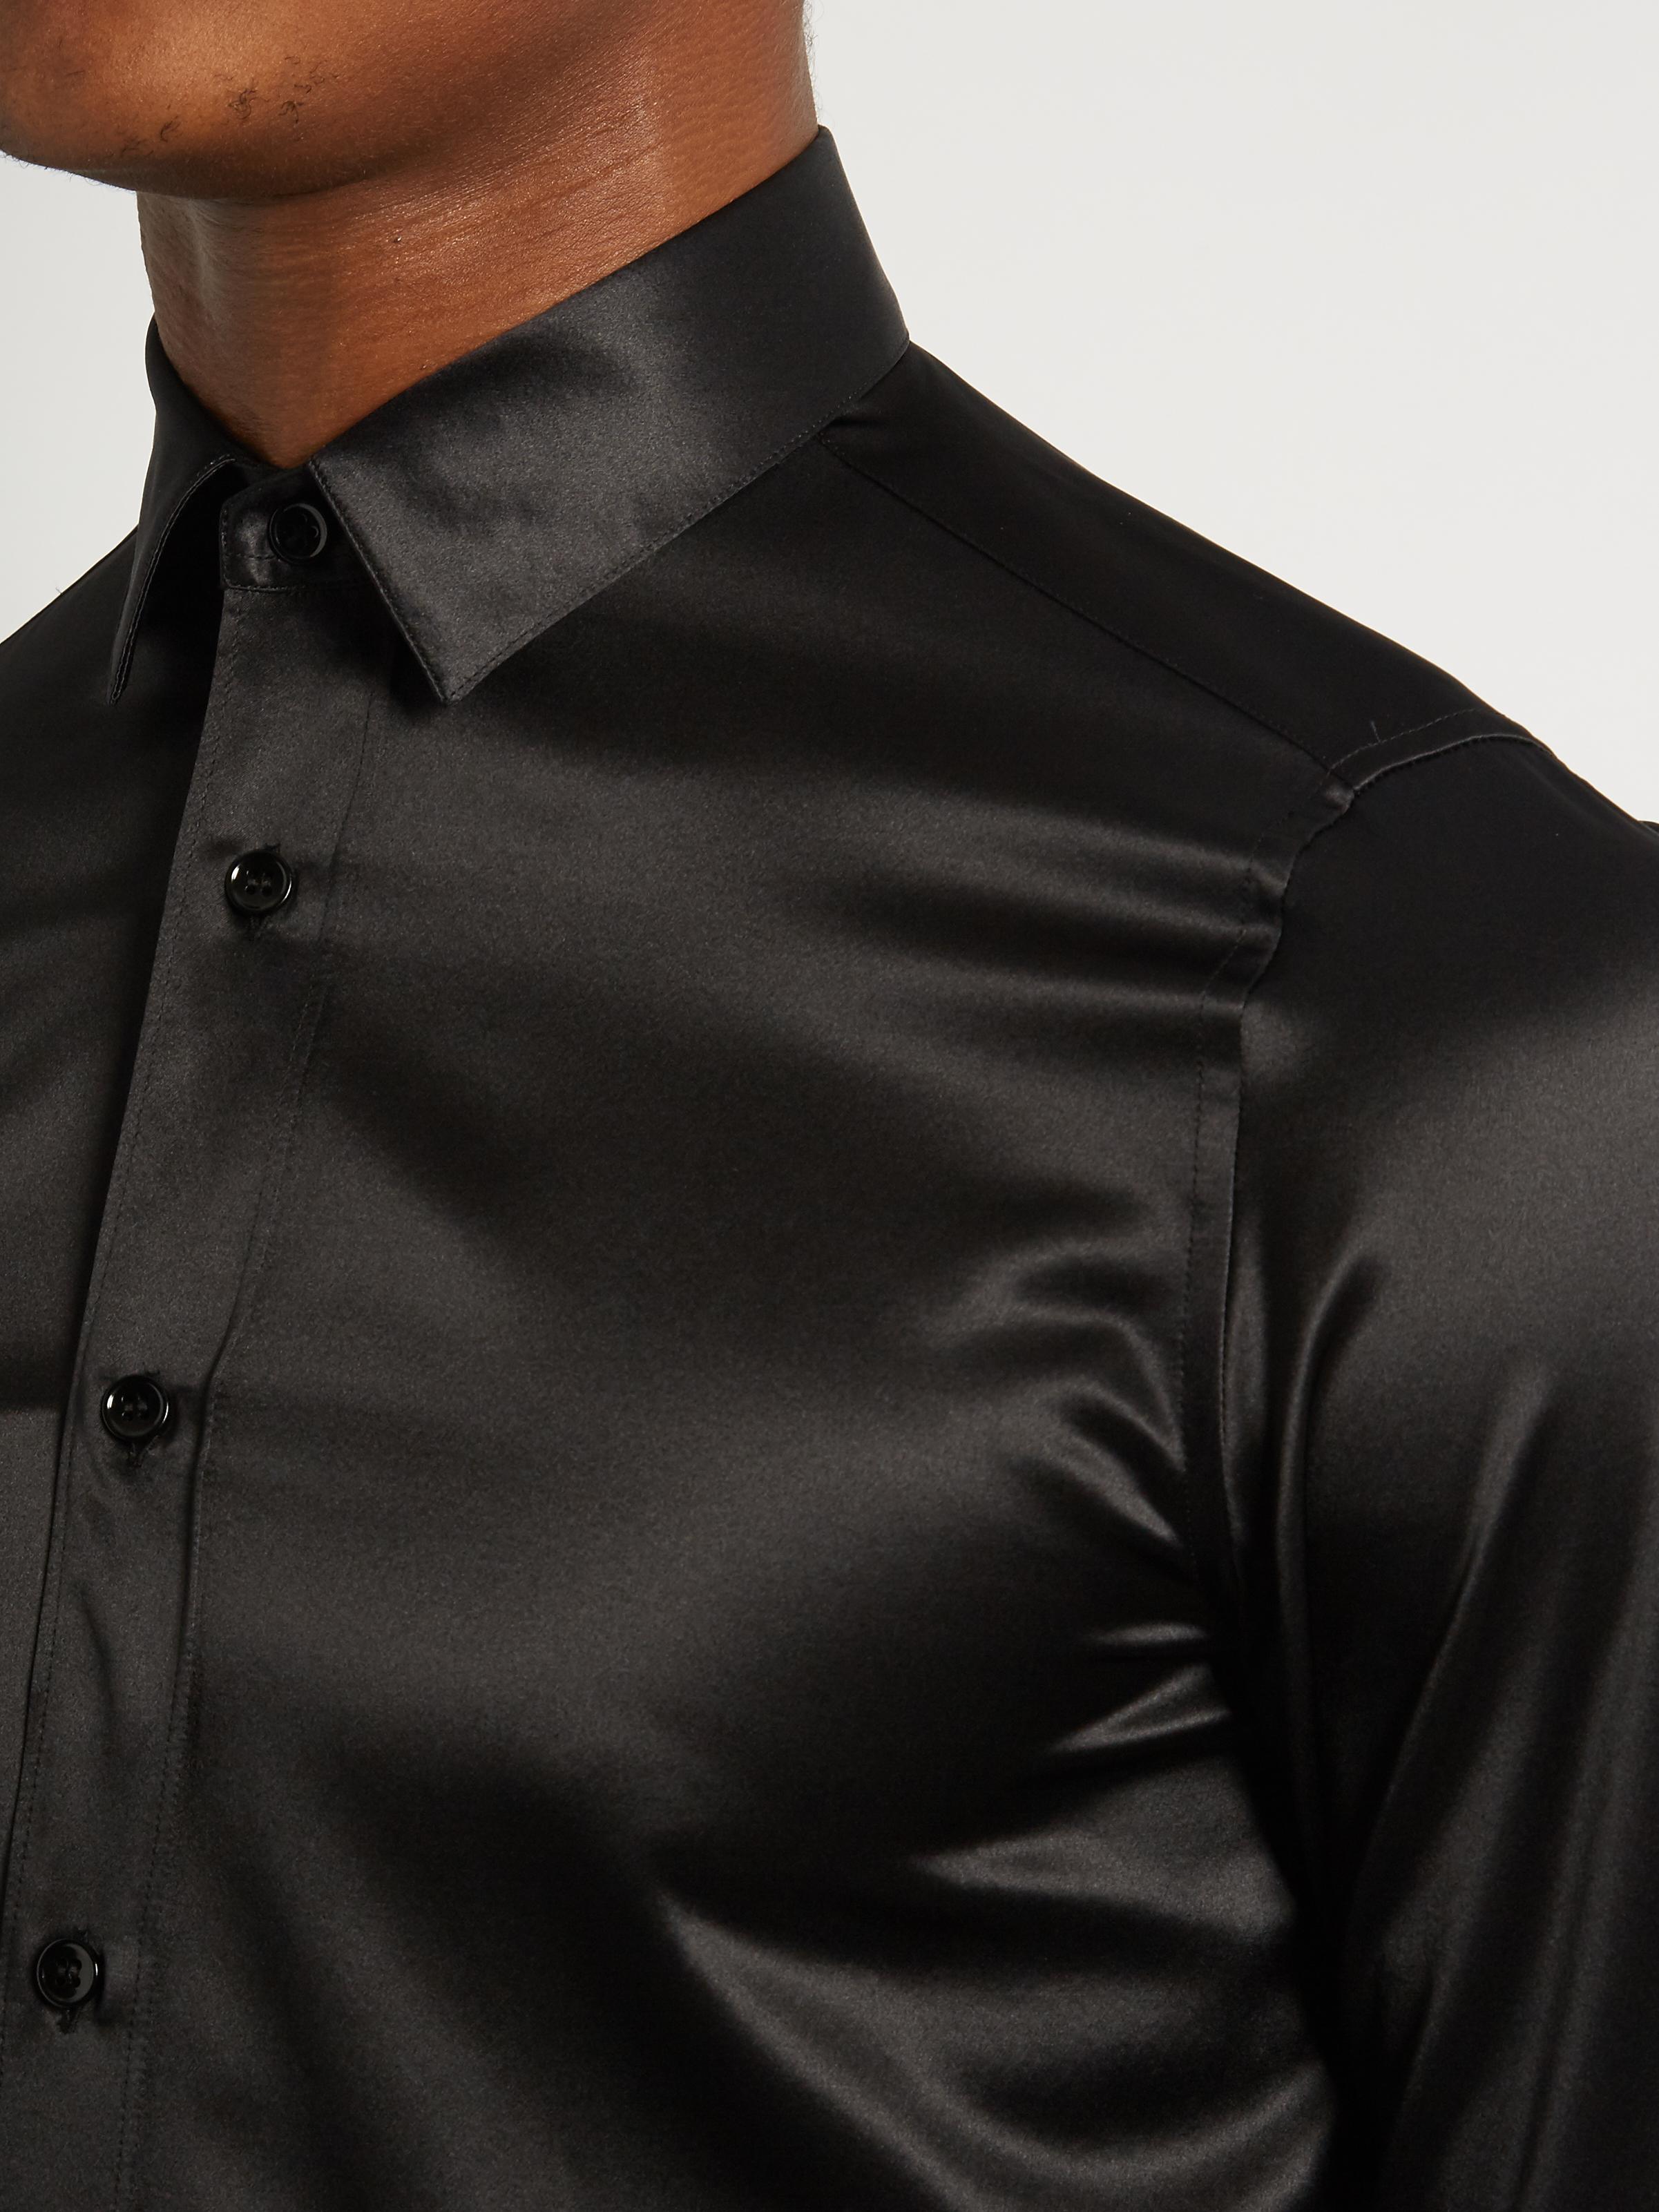 Saint Laurent Point-collar Silk-satin Shirt in Black for Men - Lyst